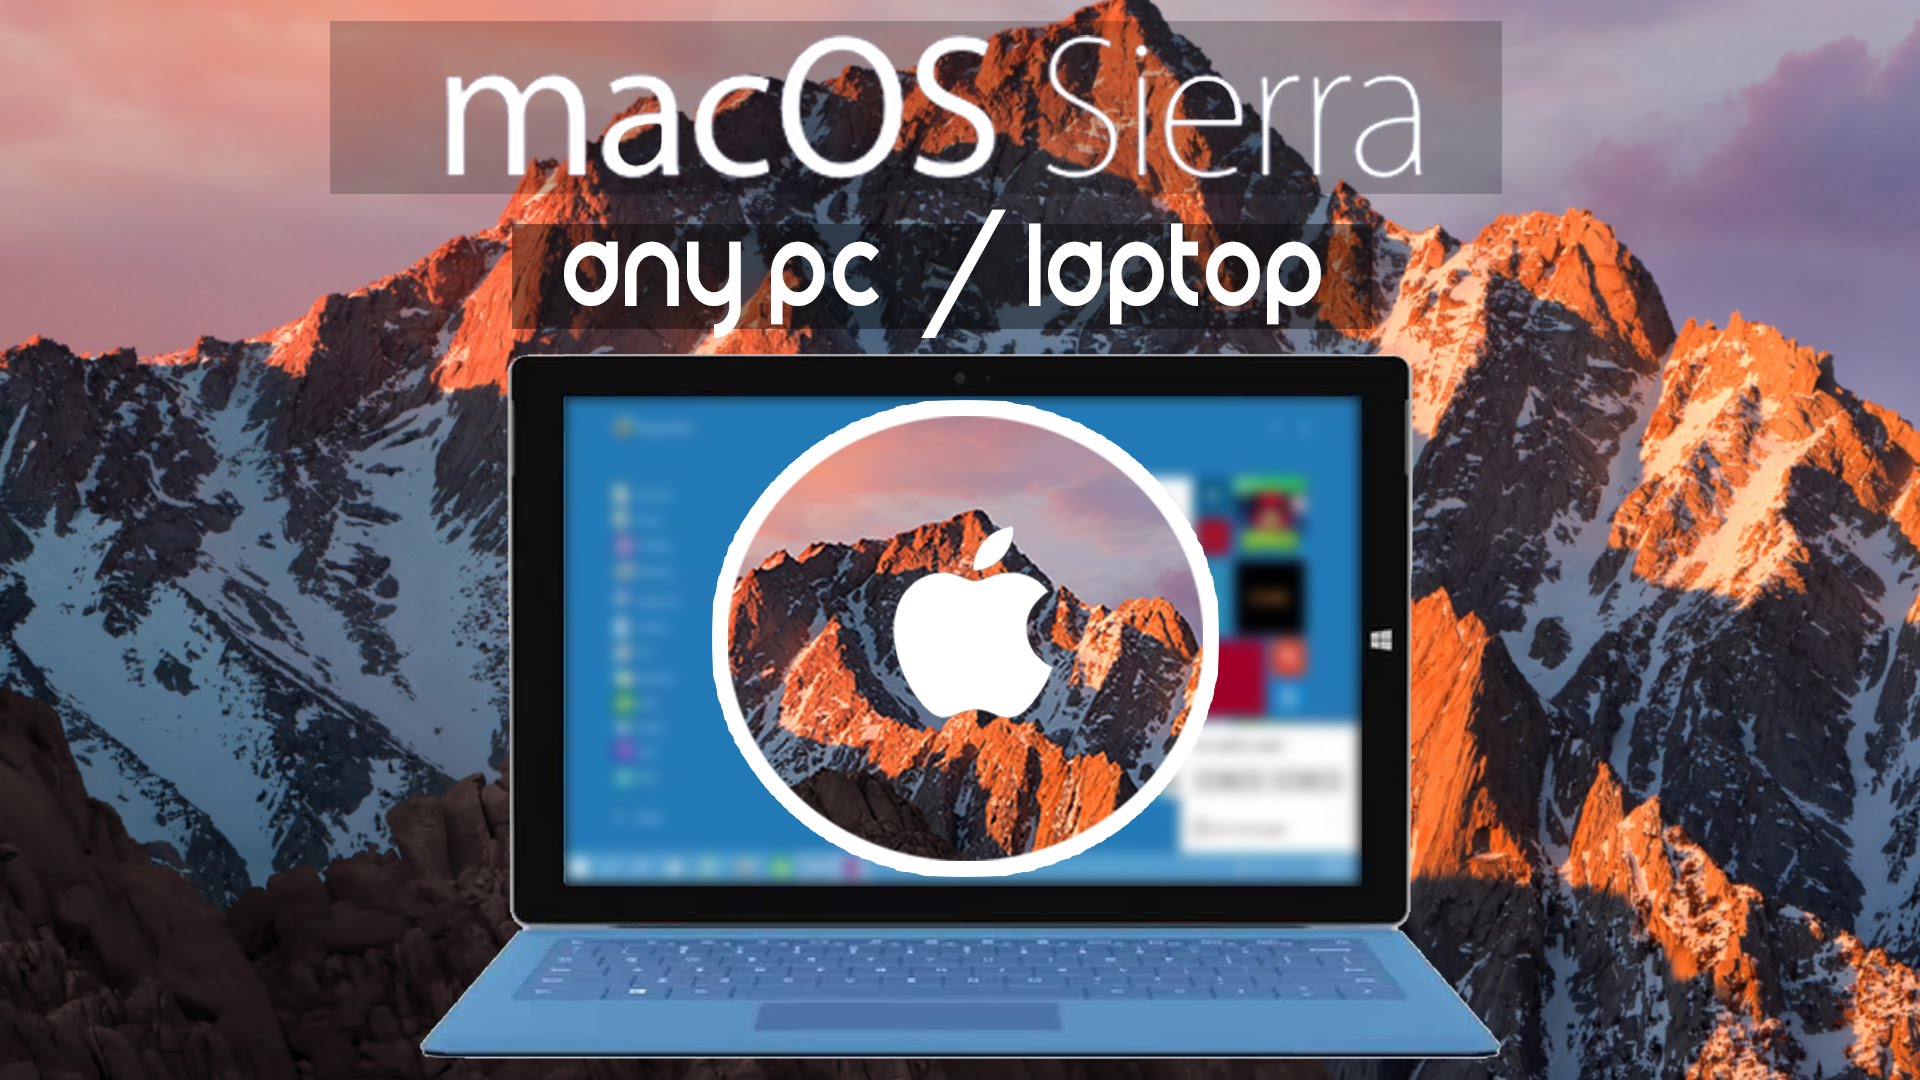 microsoft office 2017 for mac free download high sierra